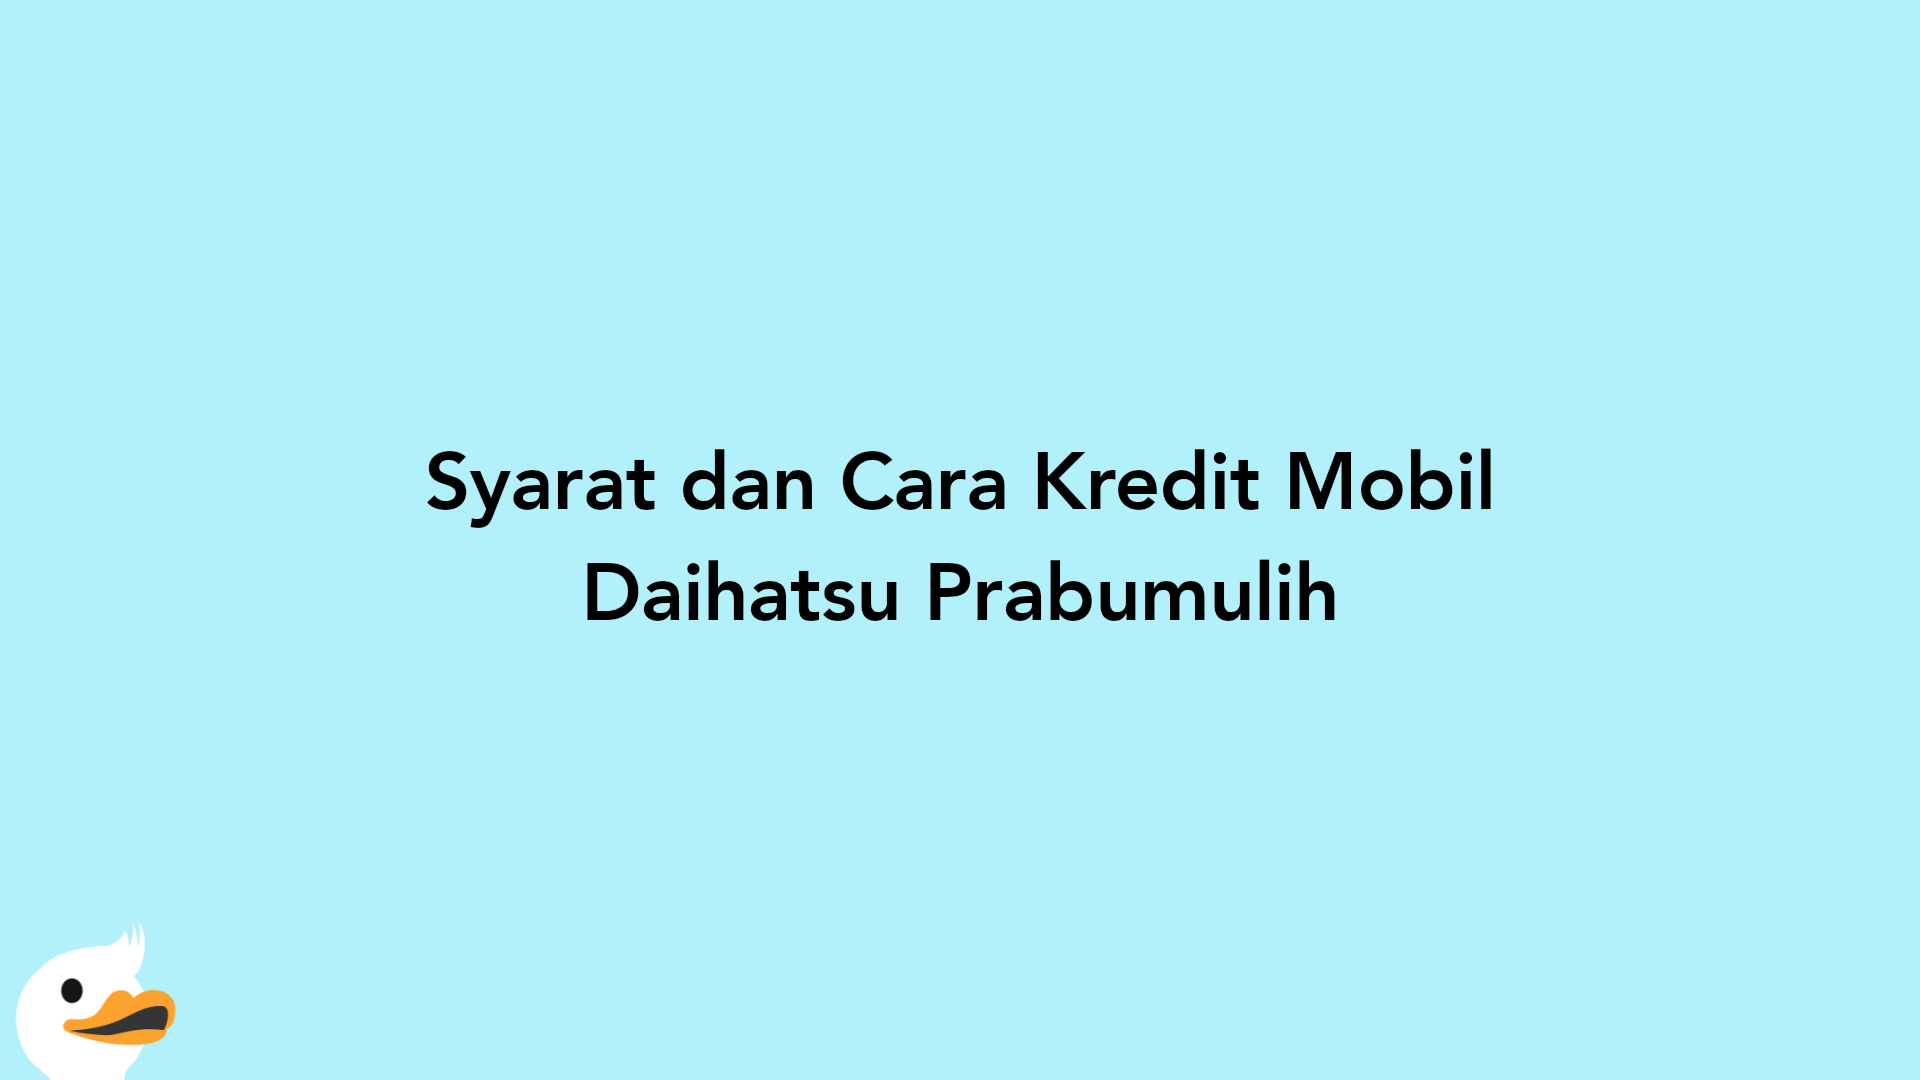 Syarat dan Cara Kredit Mobil Daihatsu Prabumulih